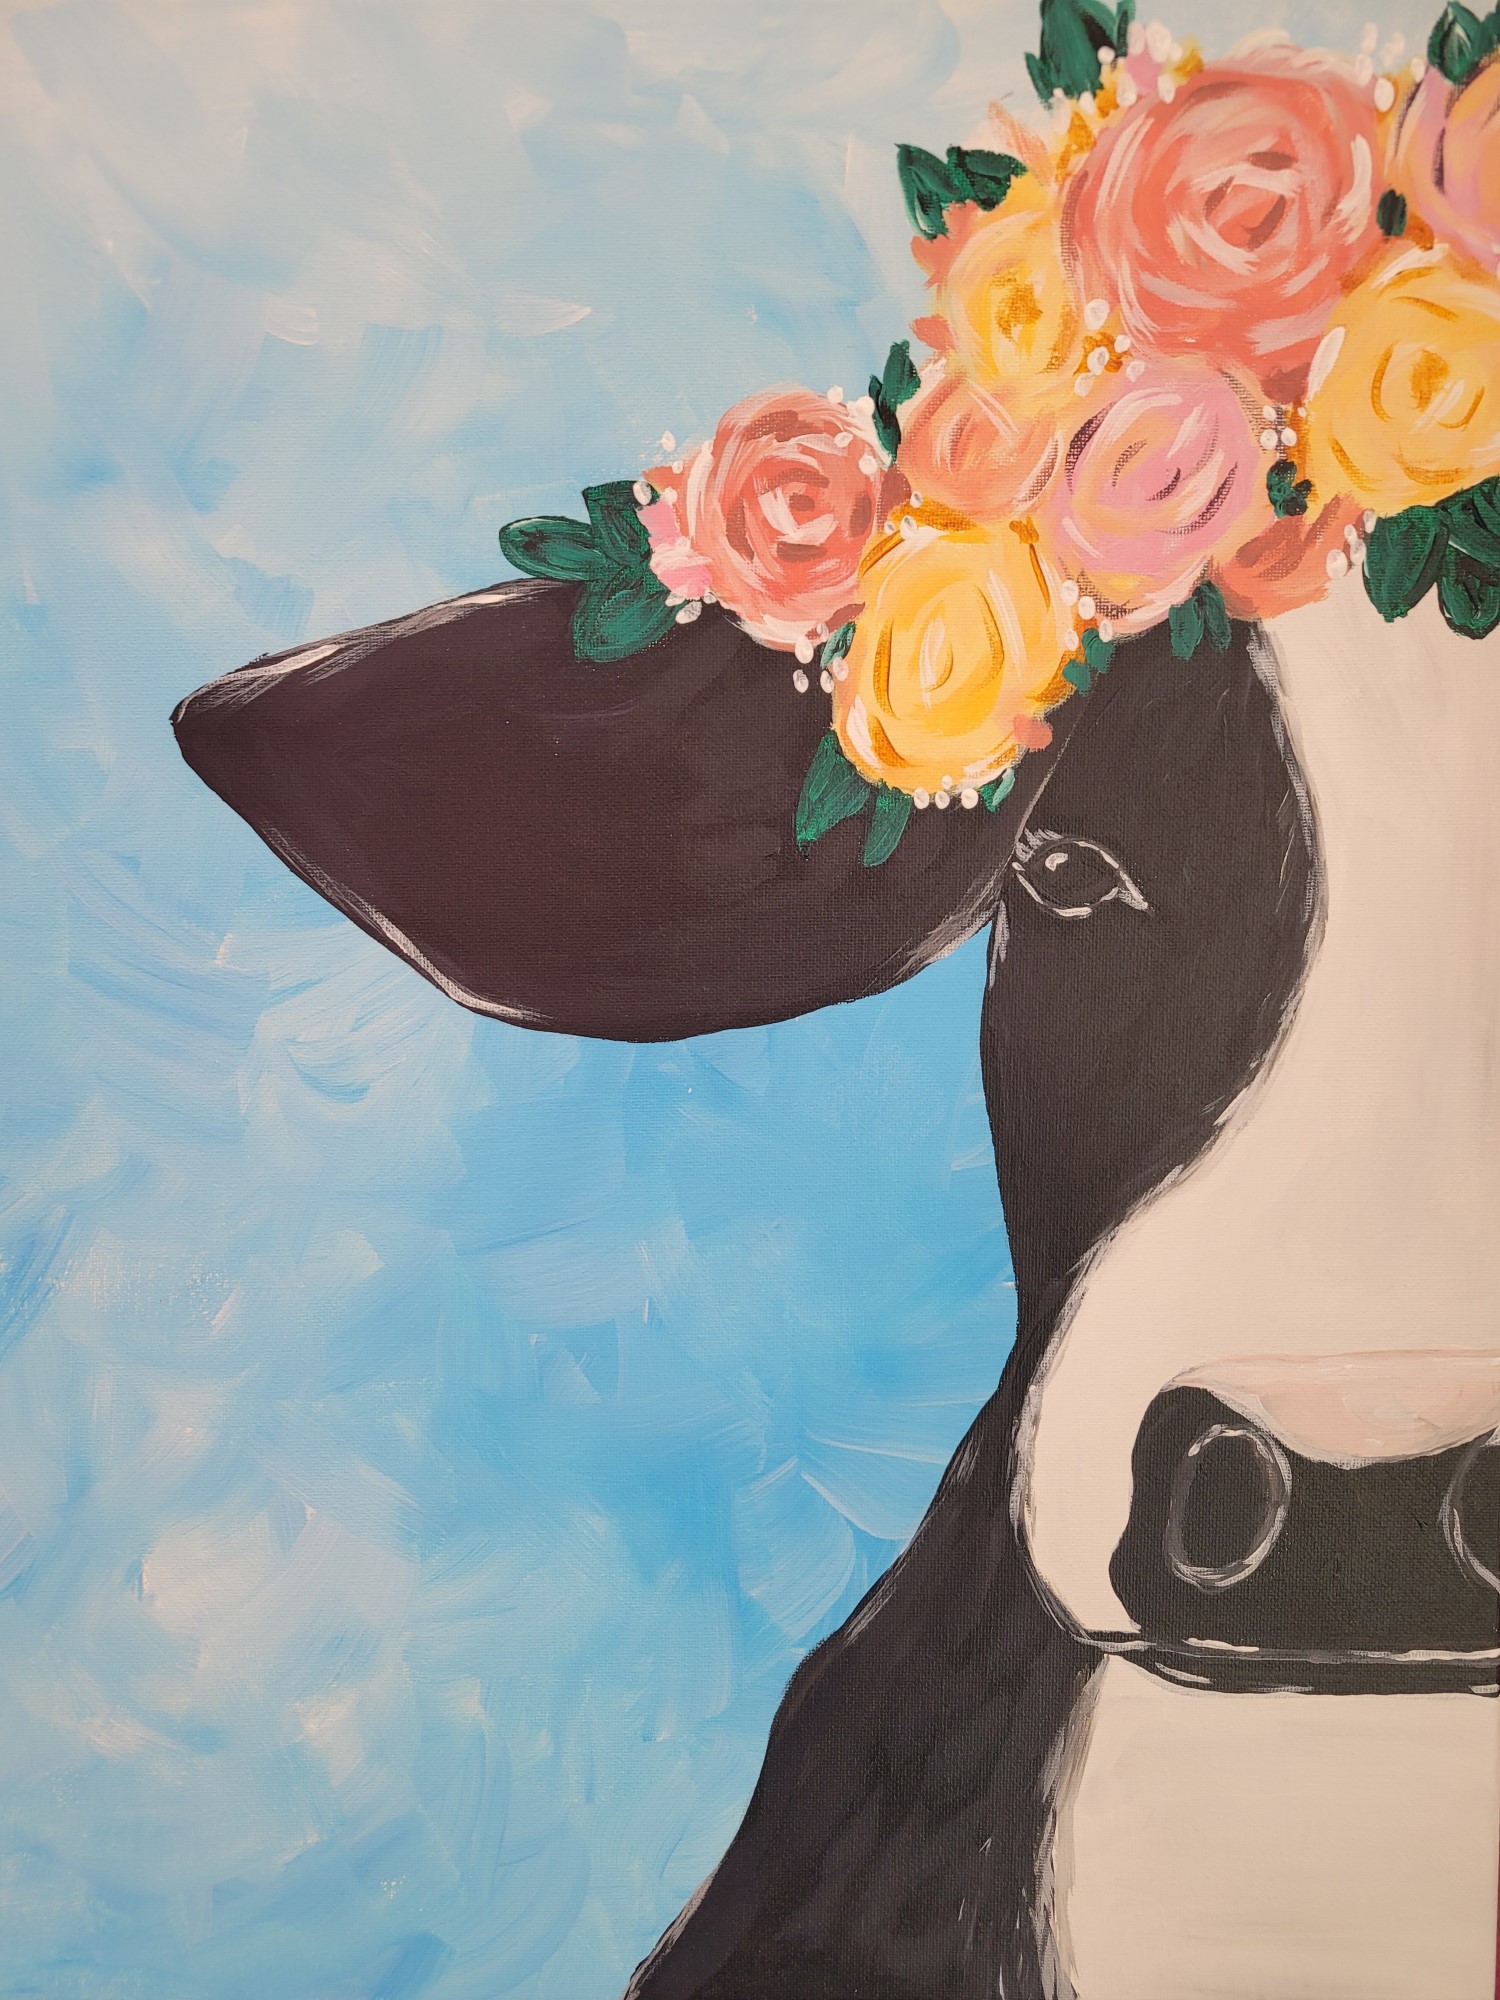 Floral Cow - 16x20 Acrylic on Canvas